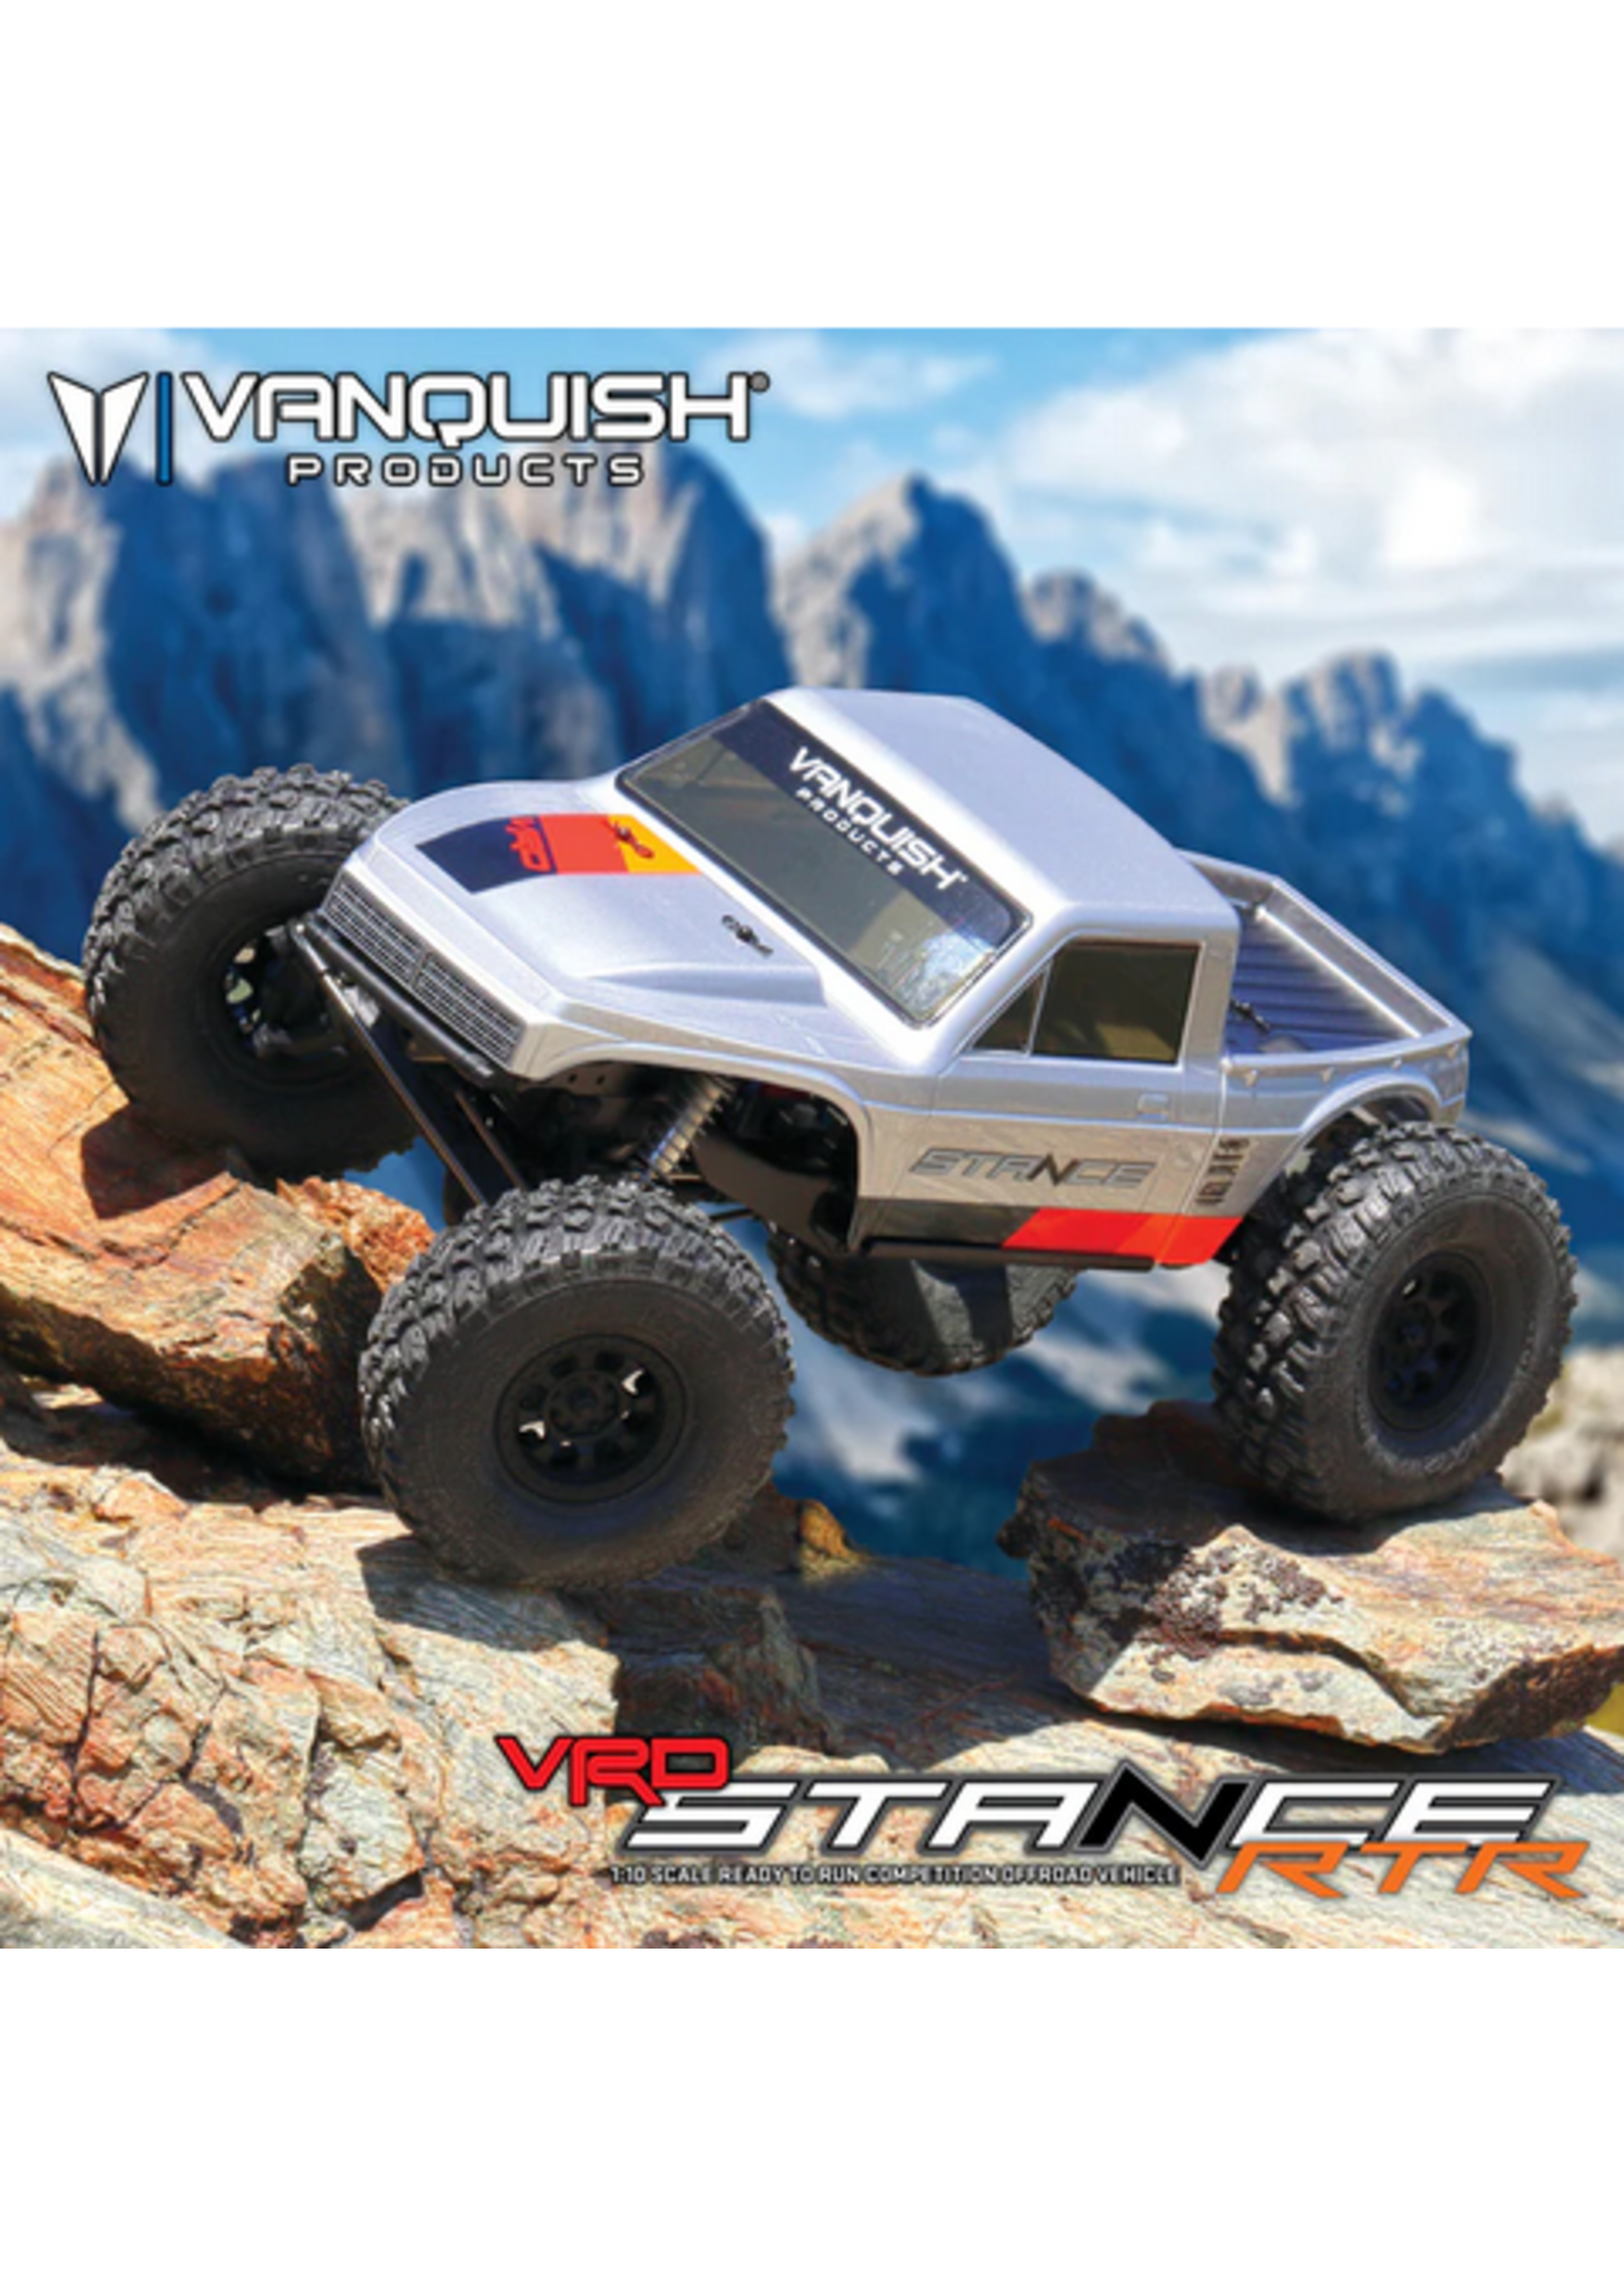 Vanquish VPS09009 Vanquish Products VRD Stance